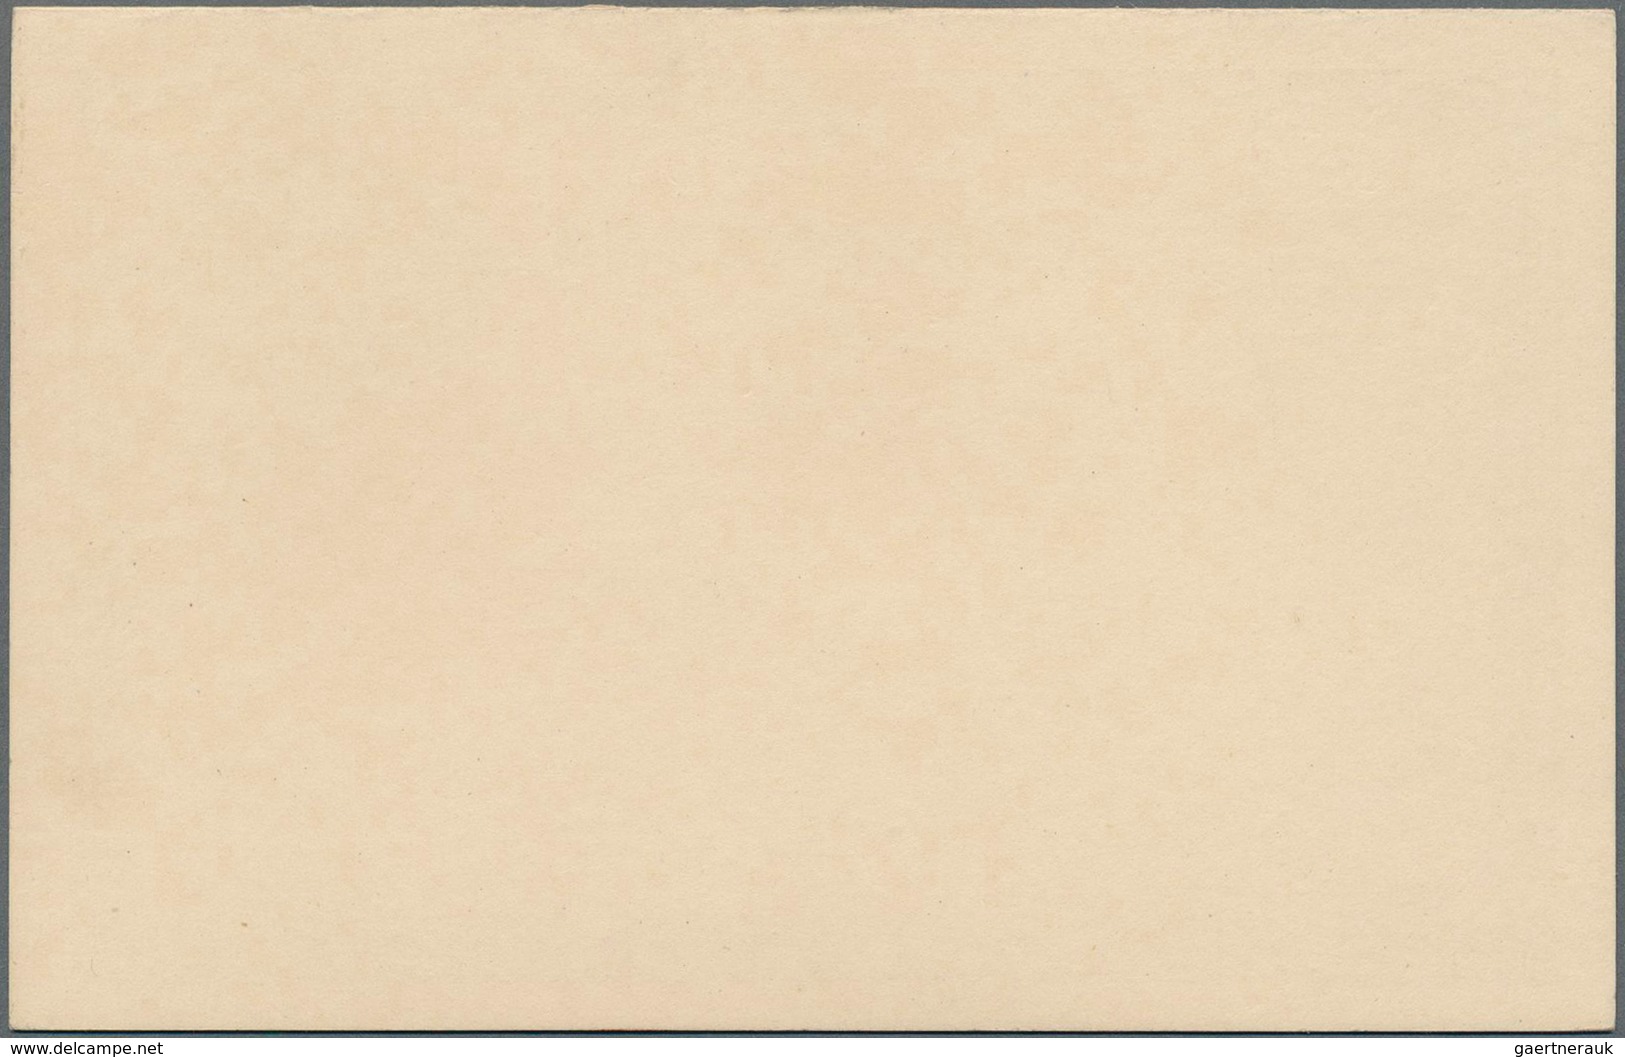 Japan - Ganzsachen: 1898, Double Card 4s. Brown, Unused C.t.o. "HANKOW I.J.P.O." - Postcards